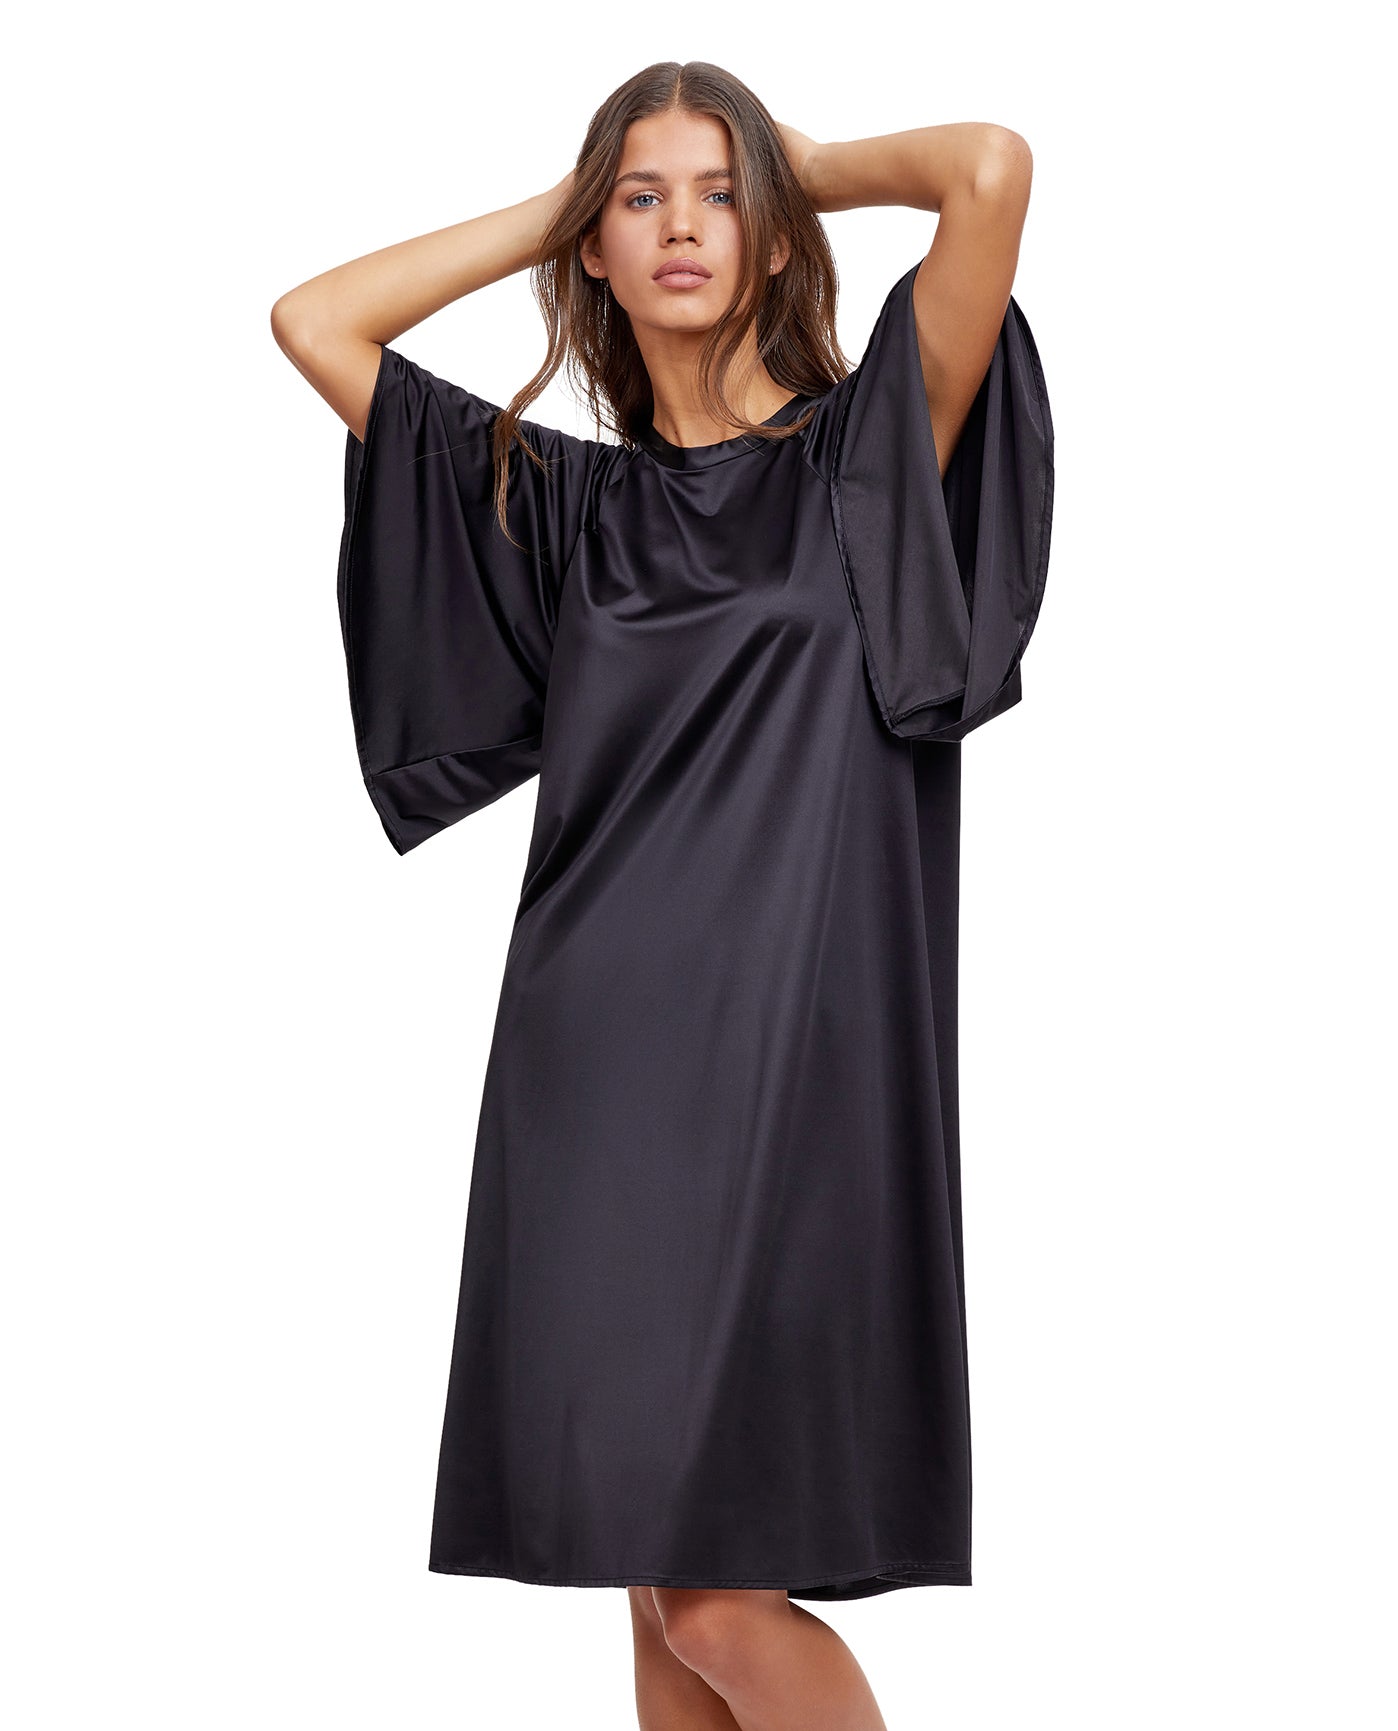 Alternate Front View Of Gottex Modest High Neck Loose Fitting Dress | GOTTEX MODEST BLACK